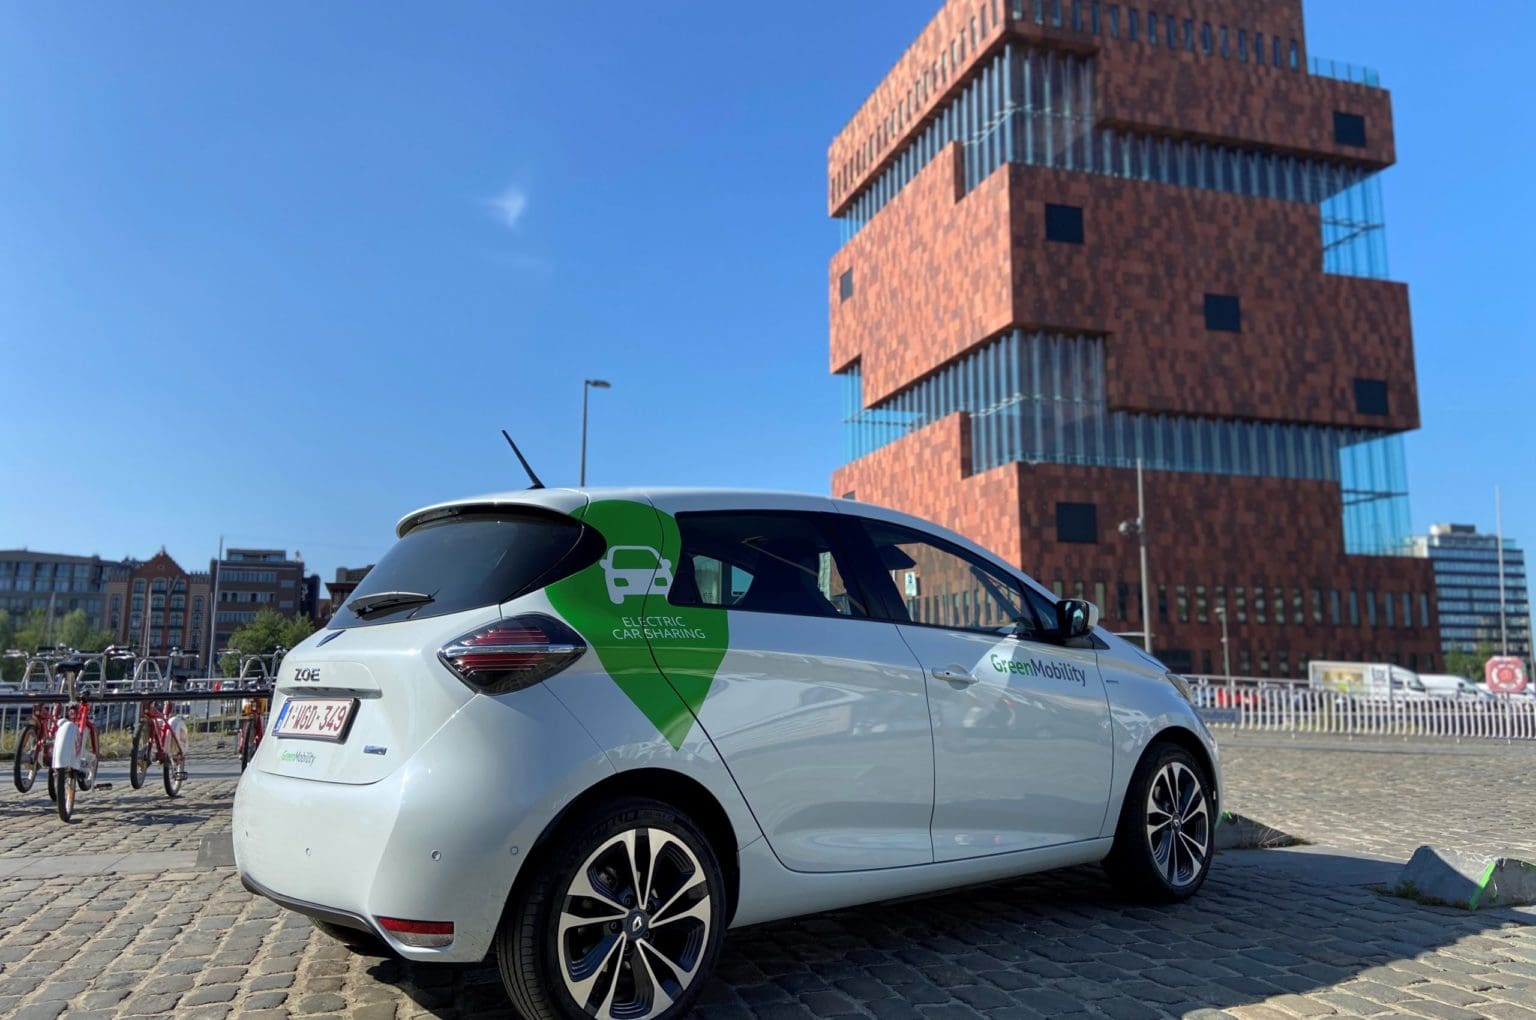 GreenMobility car at MAS in Antwerp